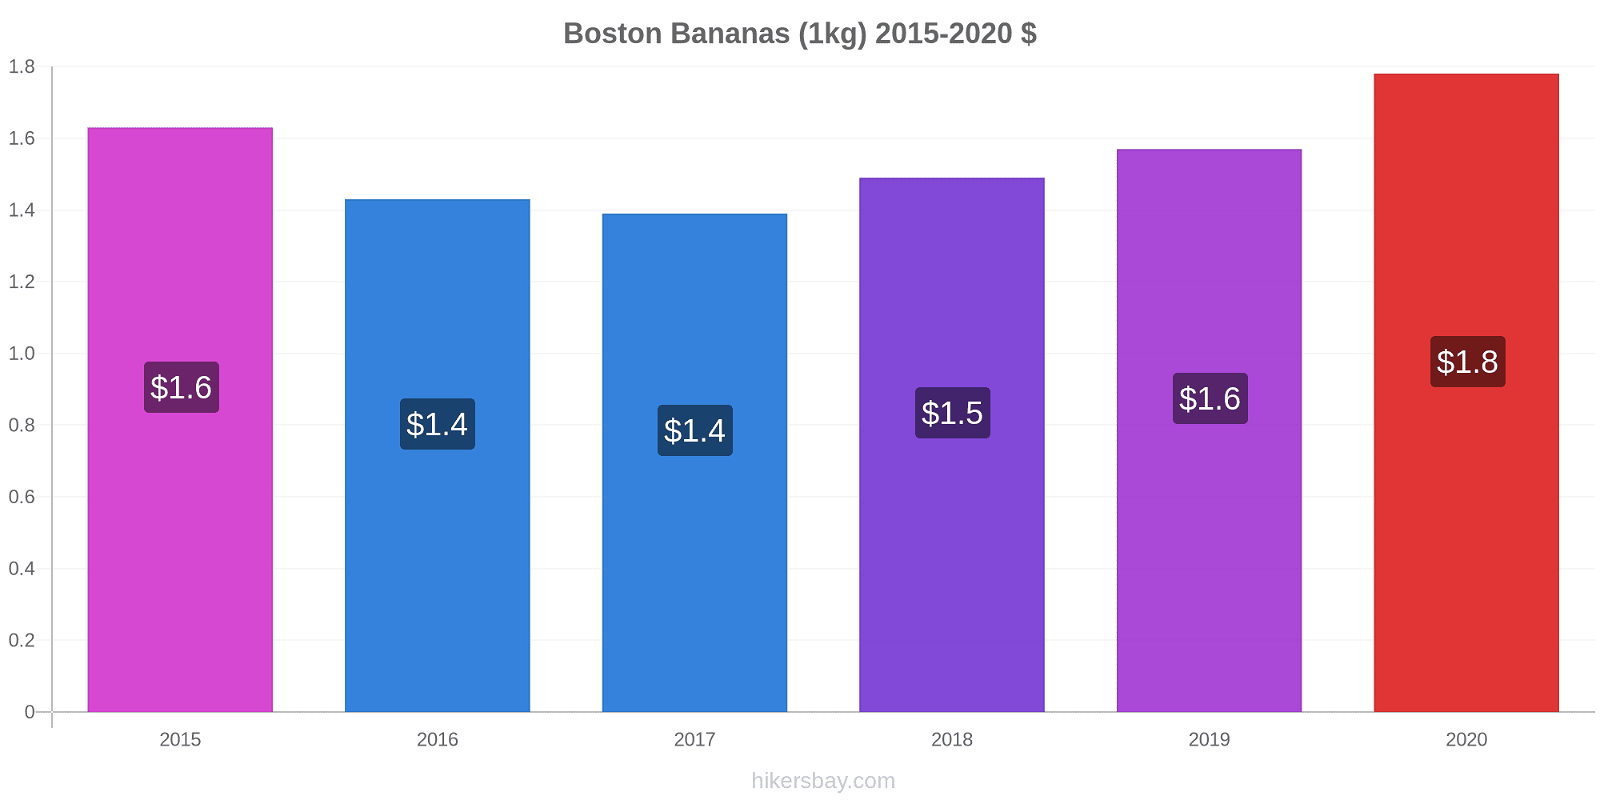 Boston price changes Bananas (1kg) hikersbay.com